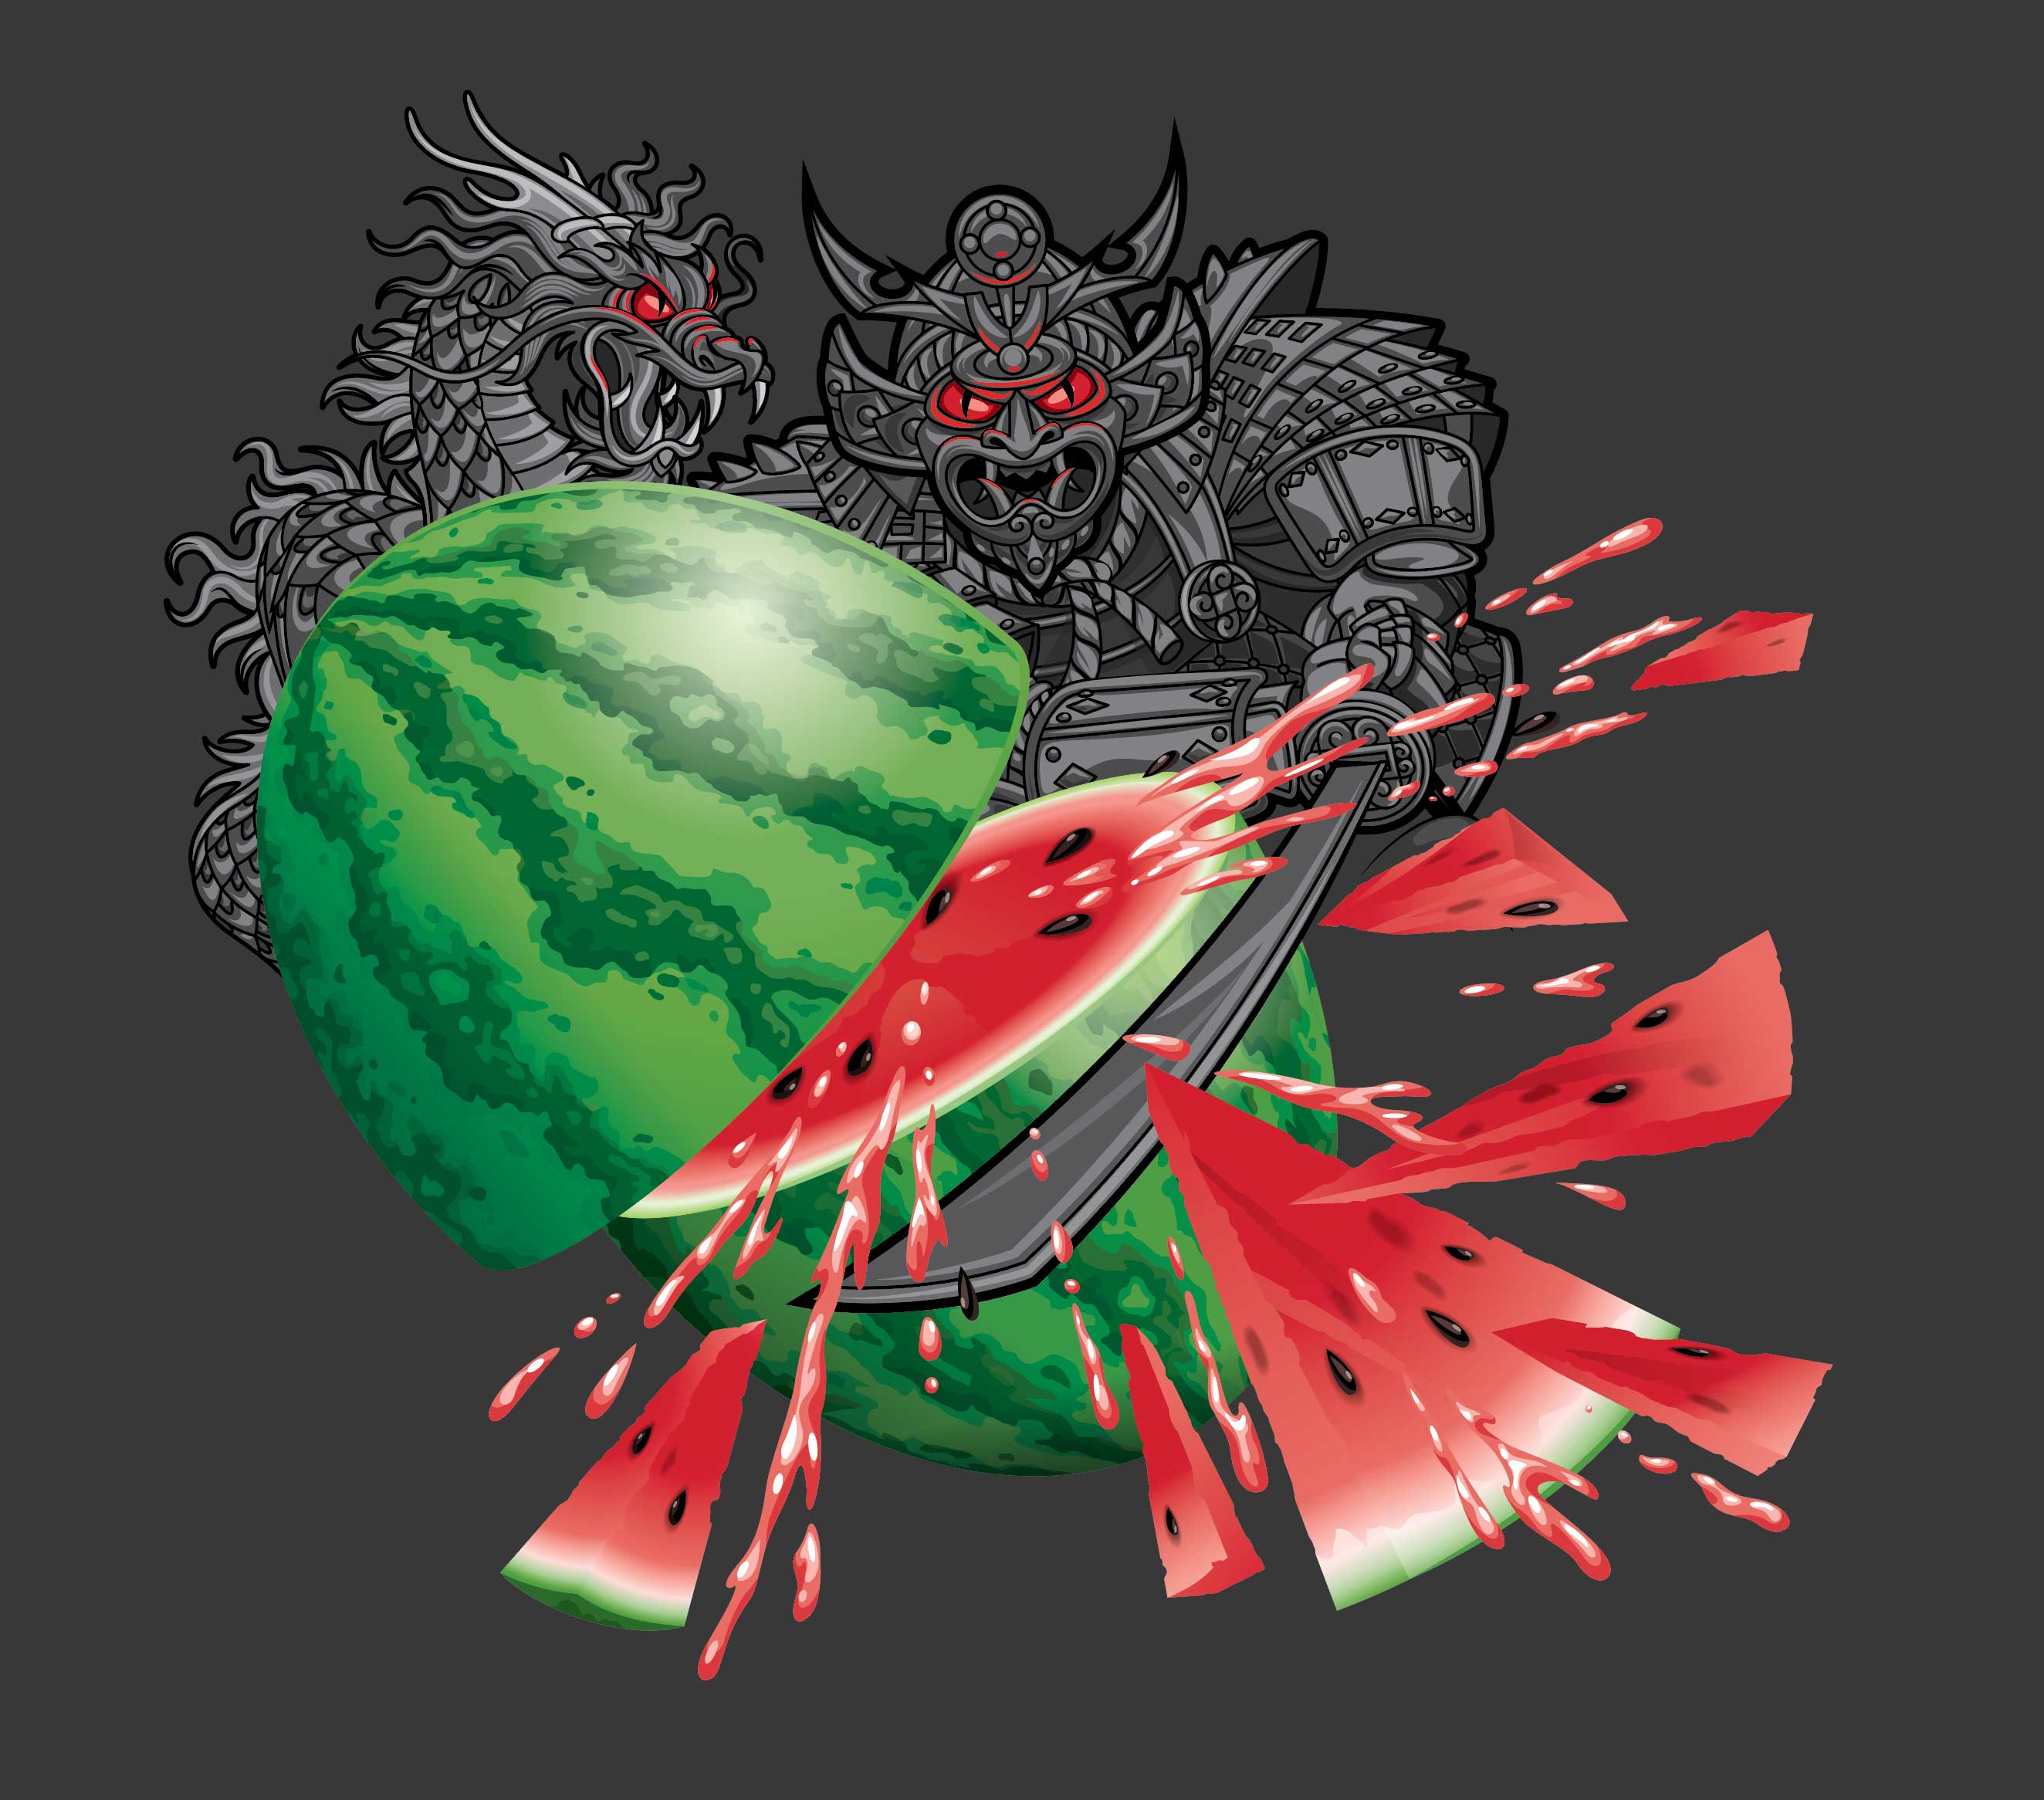 Chris Musselman Illustration Mikes Harder Watermelon Samurai Soldier and Dragon